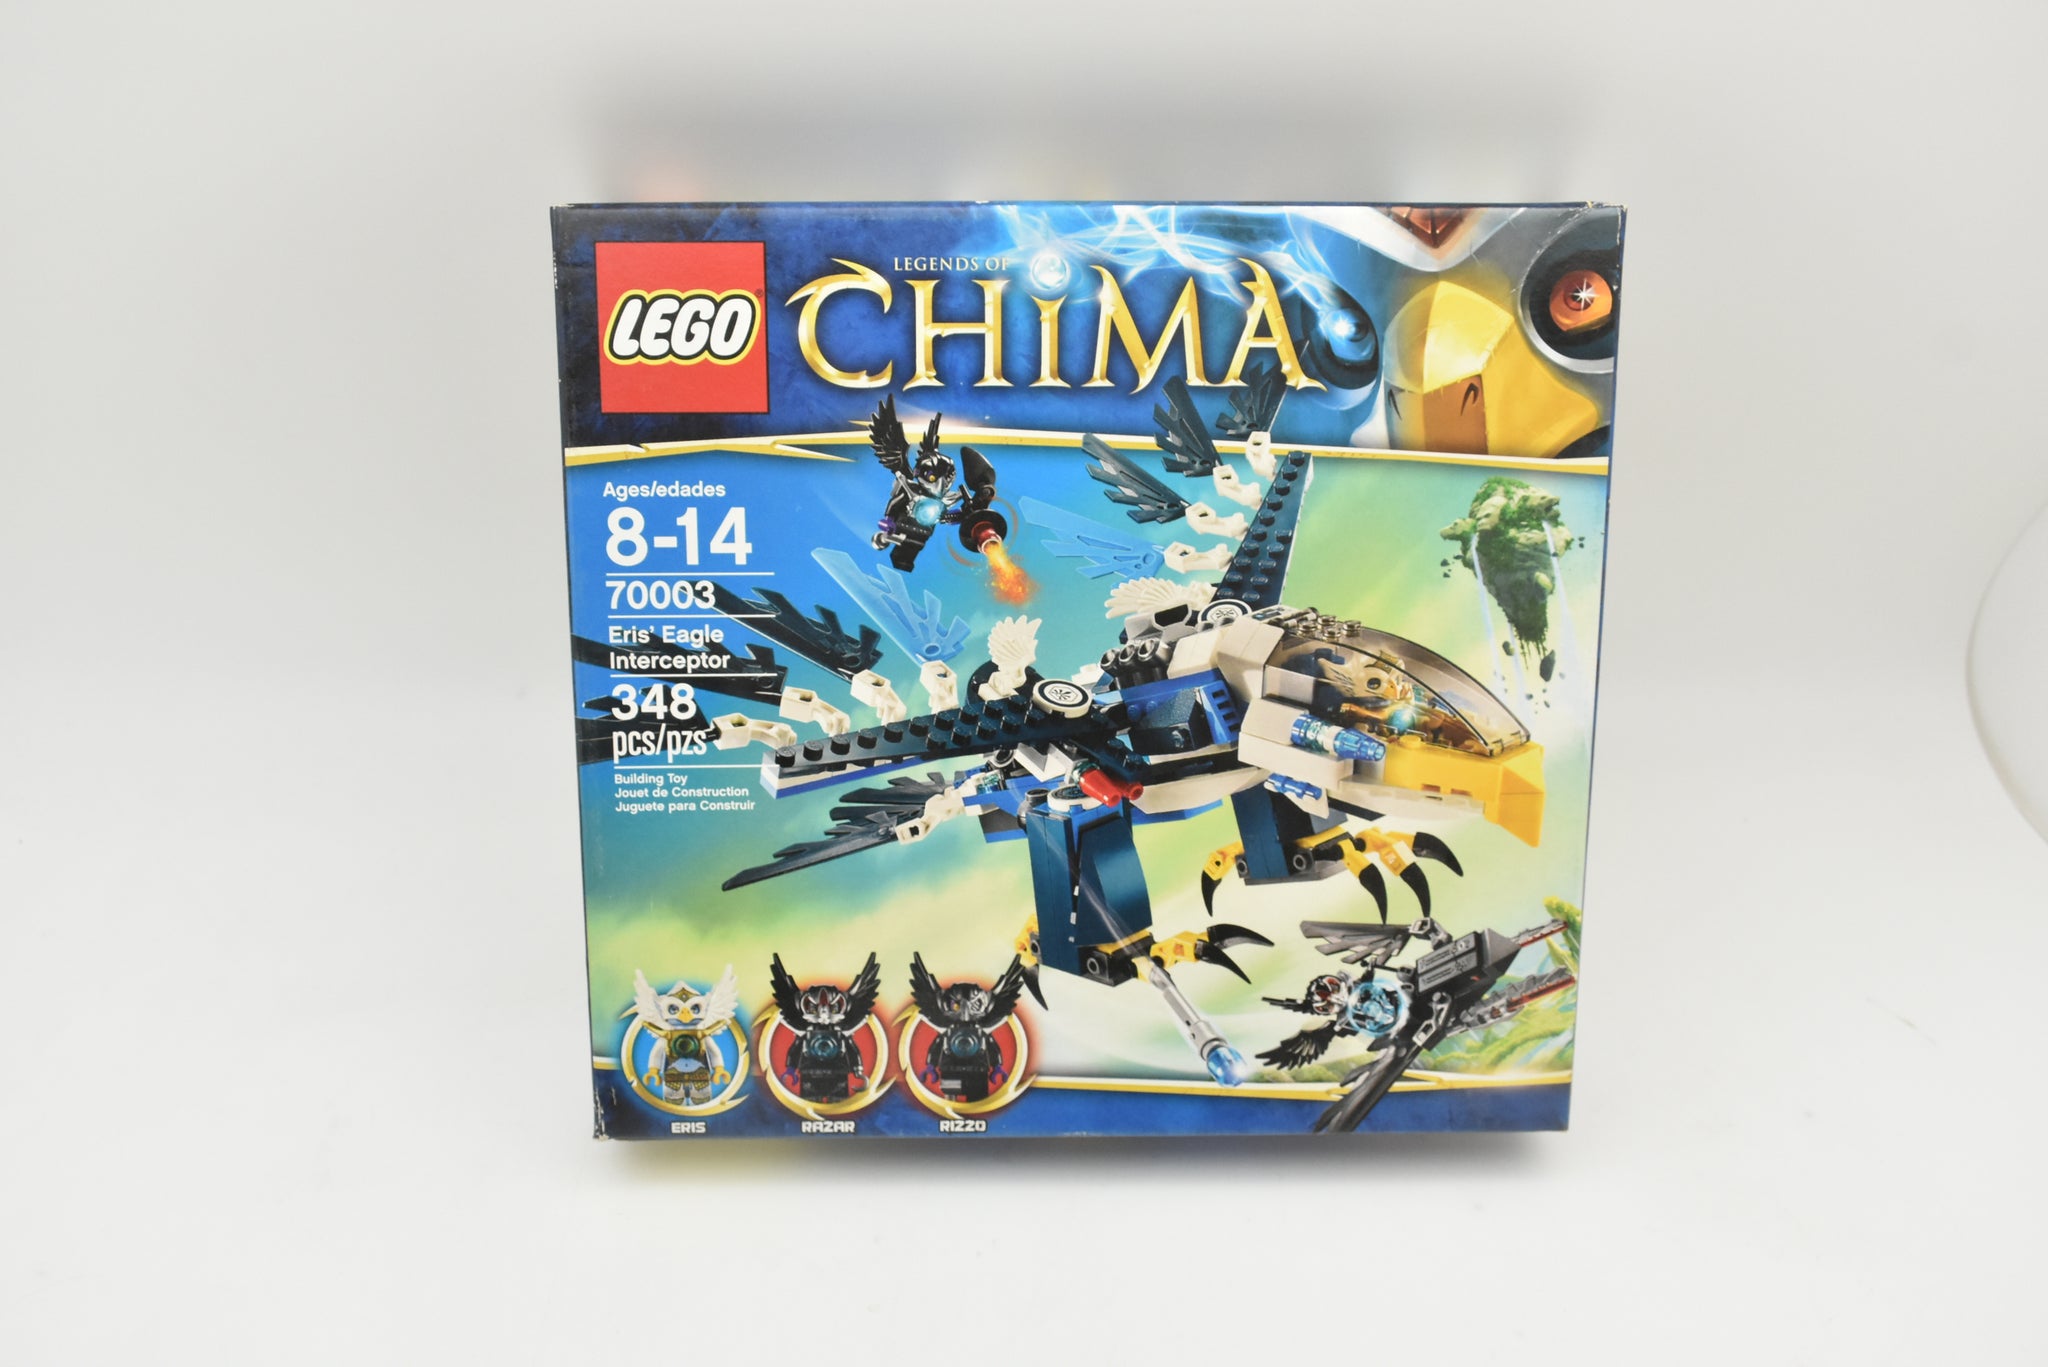 Eris' Interceptor | Legends of Chima 70003 LEGO ProTinkerToys.com